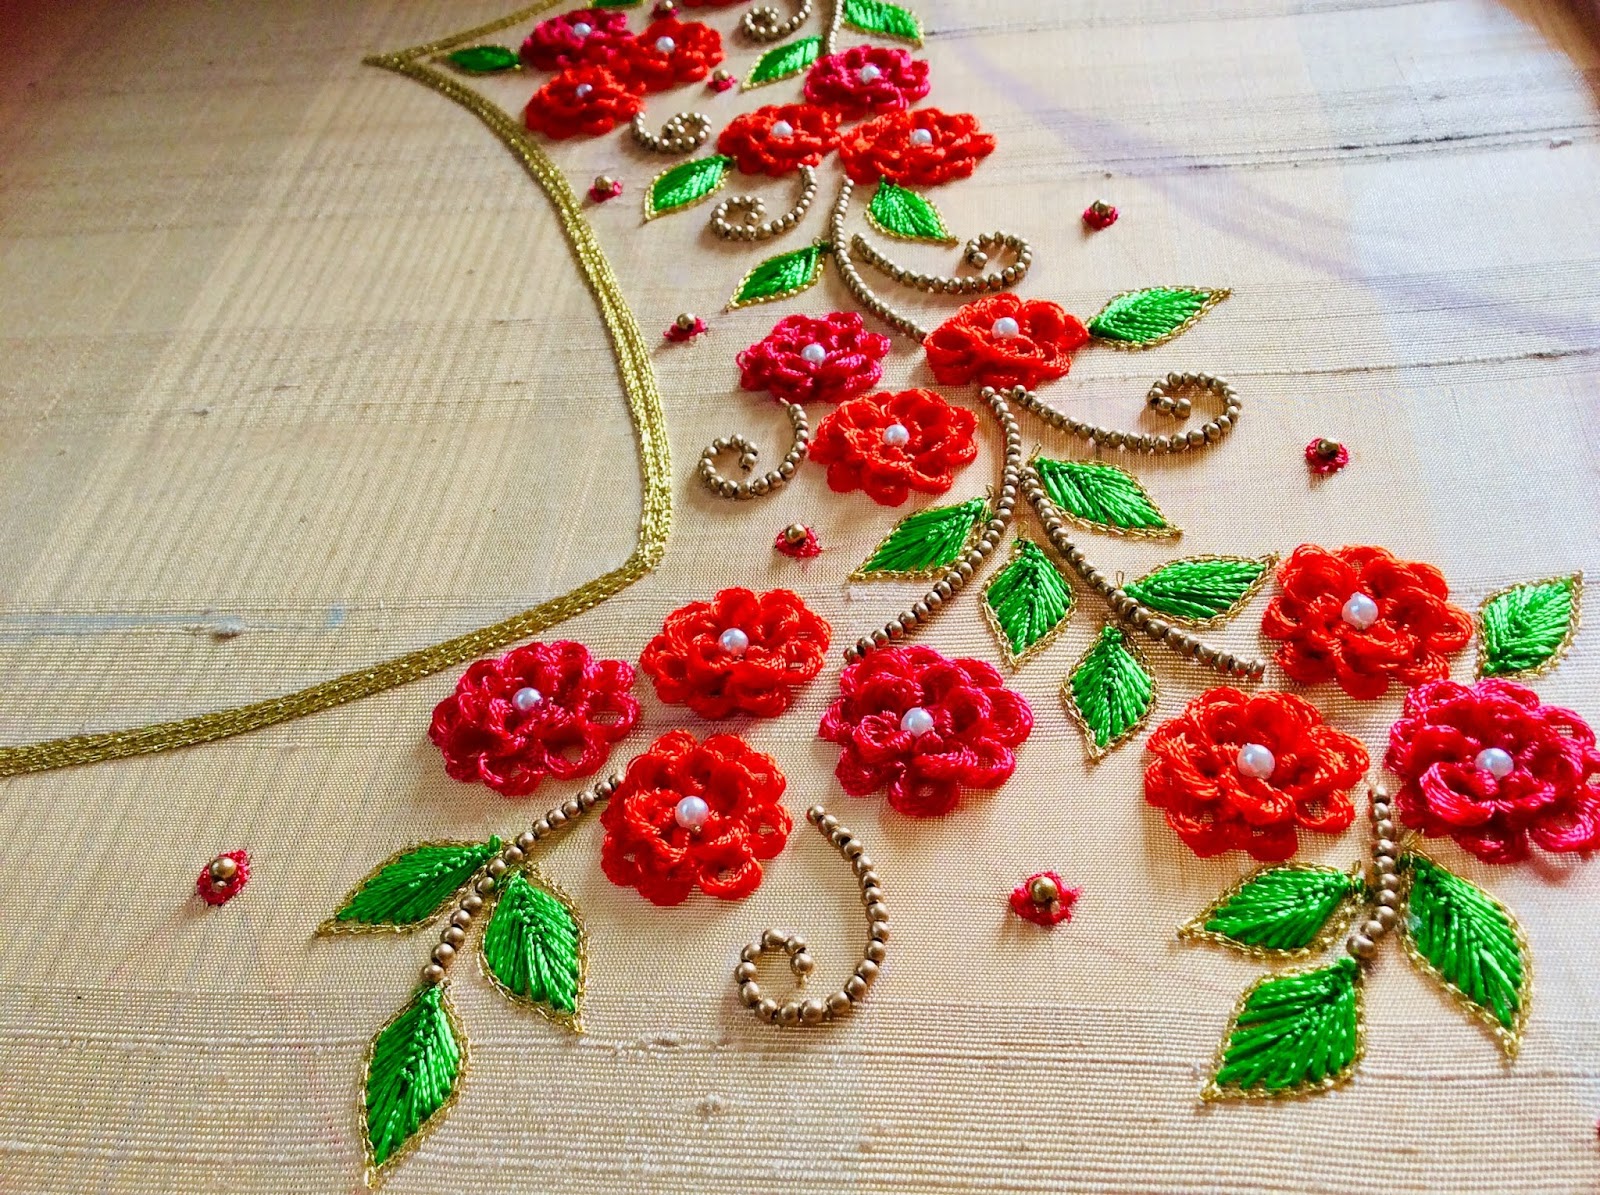 Embroidery/aari Wooden Frame Wrapping/binding Nada/binding Rope/cotton  Dori, Embroidery Rings, Embroidery Hoop, Tambour Frame, एम्ब्रायडरी फ्रेम -  Eshwar Shop, Madurai | ID: 26033158533